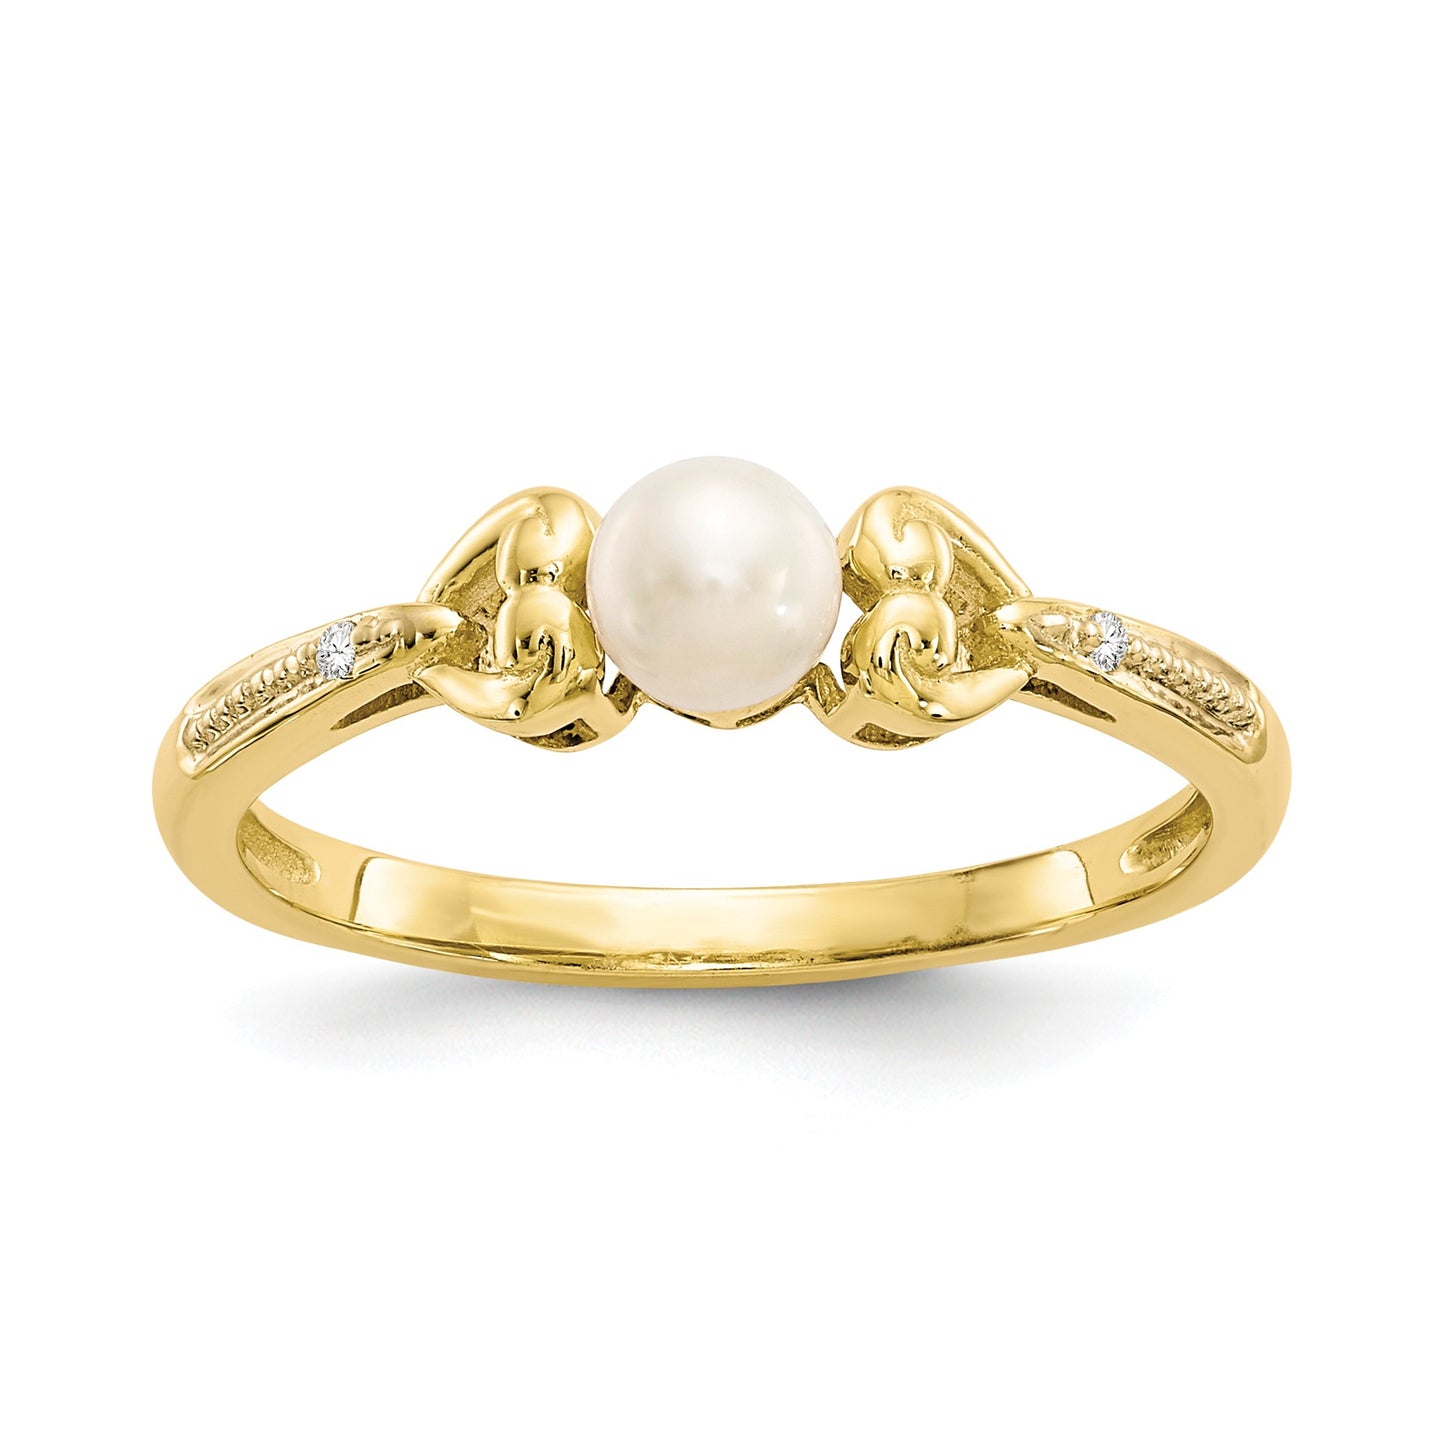 10K Yellow Gold FW Cultured Pearl Diamond Ring